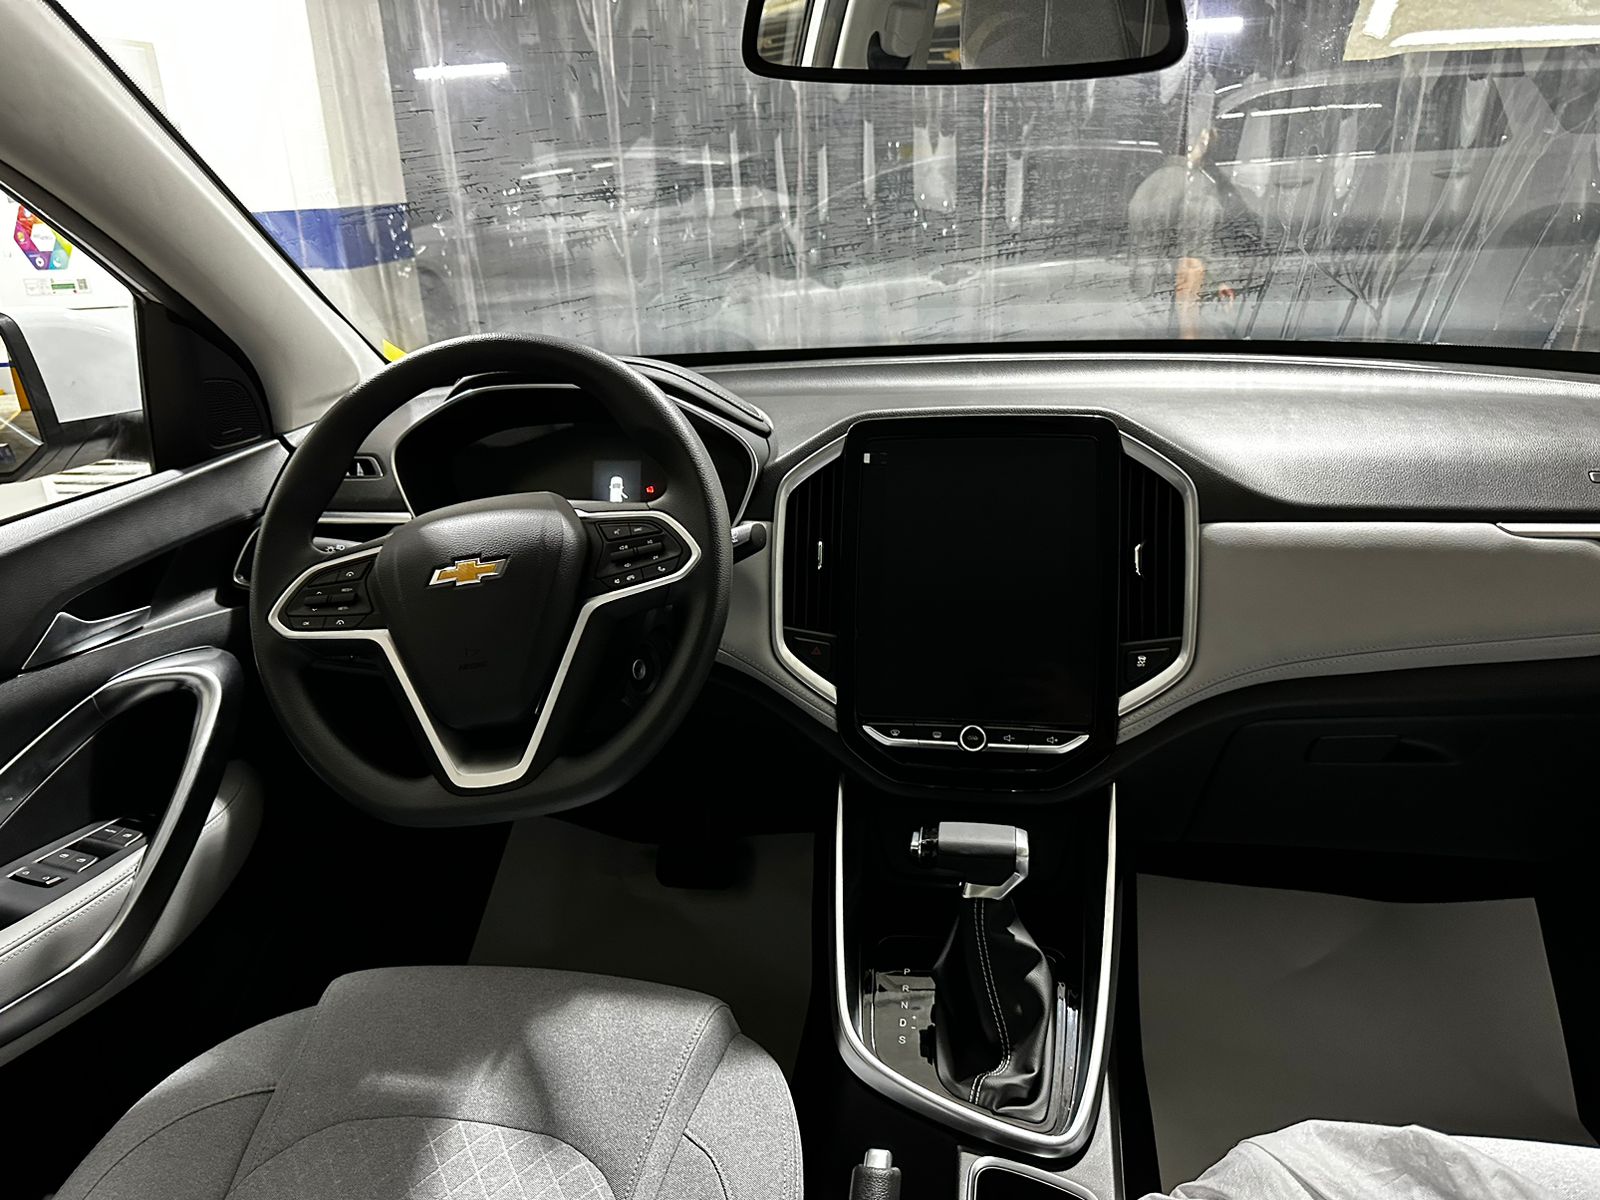 Chevrolet Captiva 7 Seater-pic_1